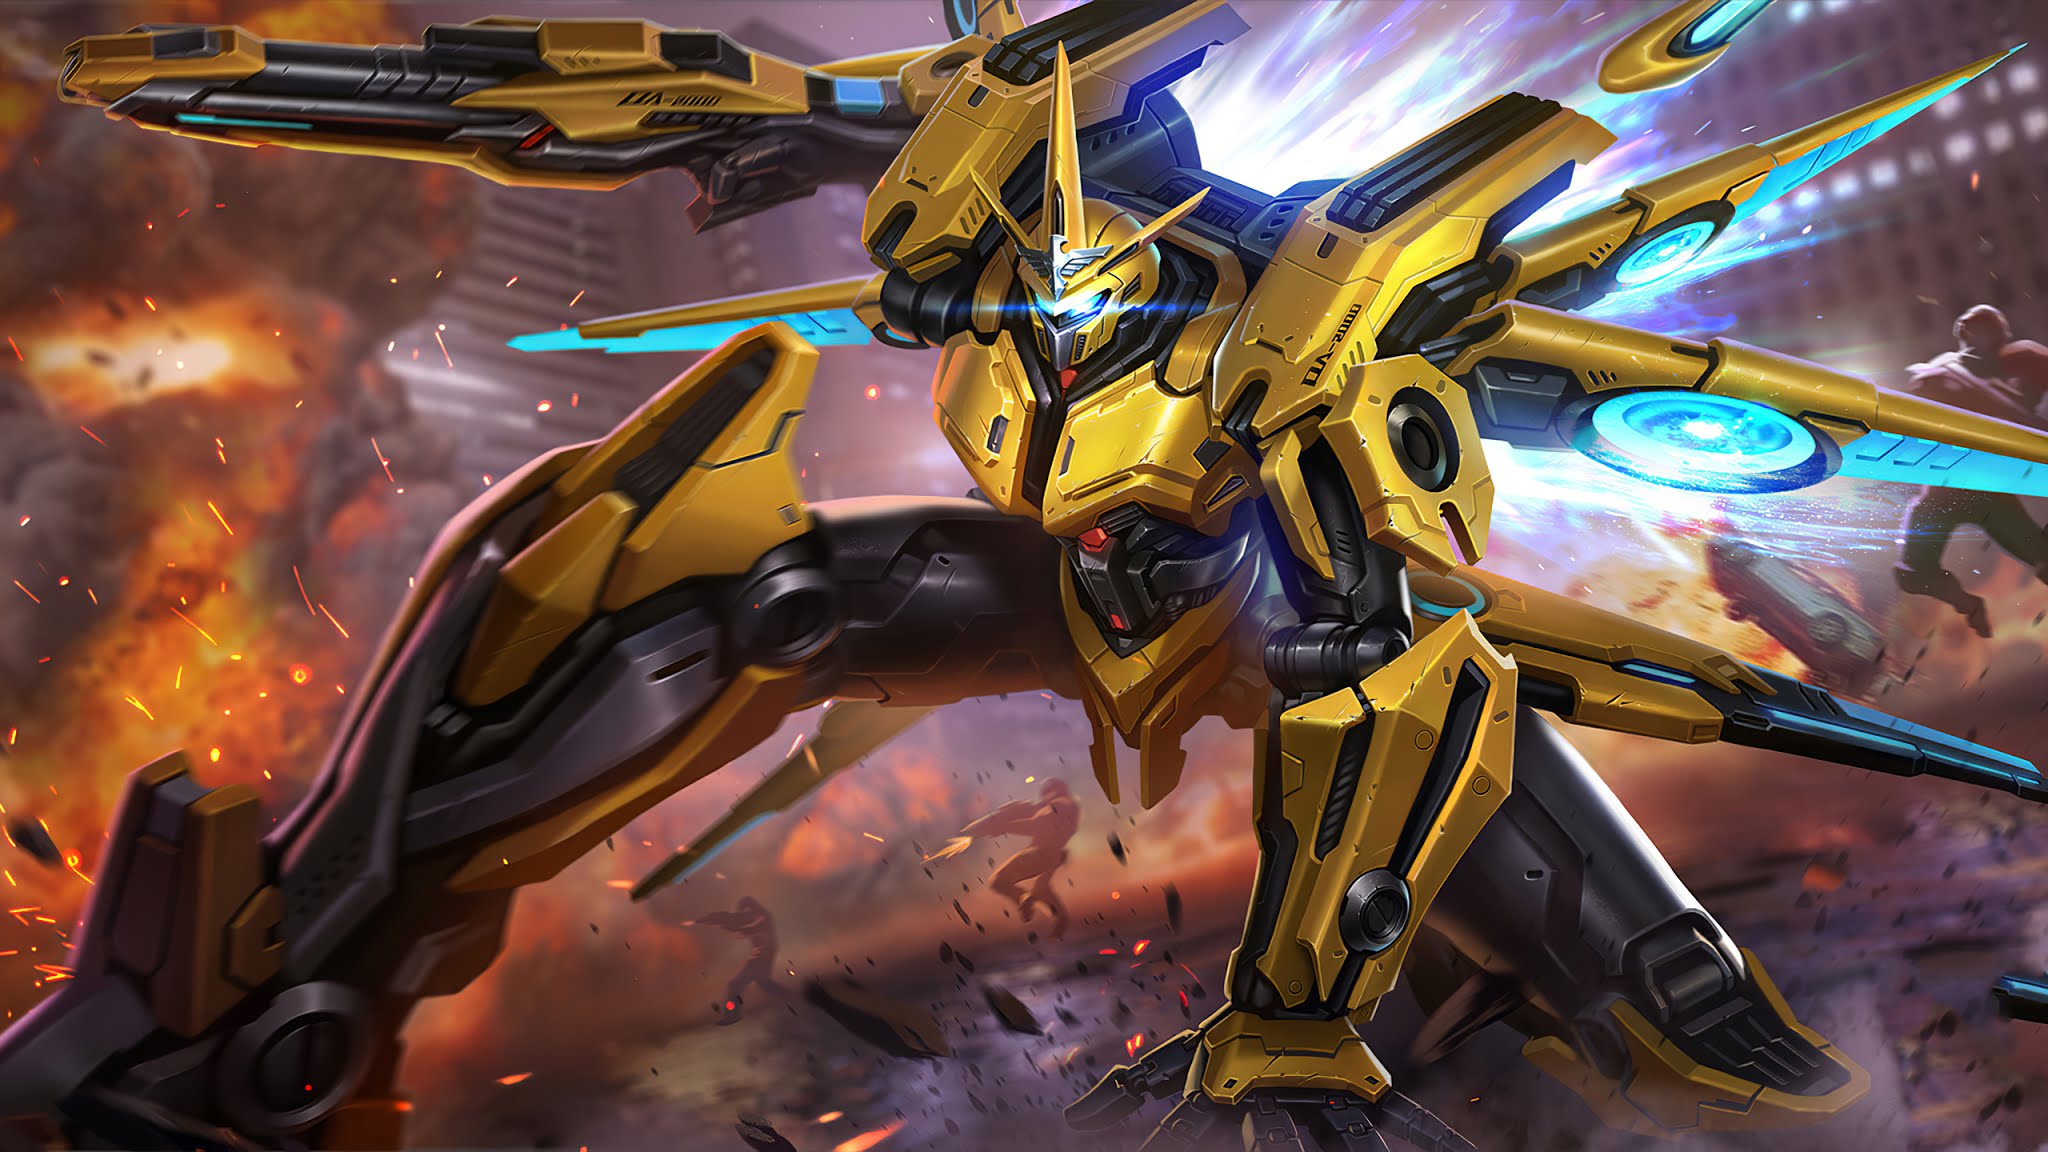 Wallpaper Bumblebee, Yellow Car, Transformers